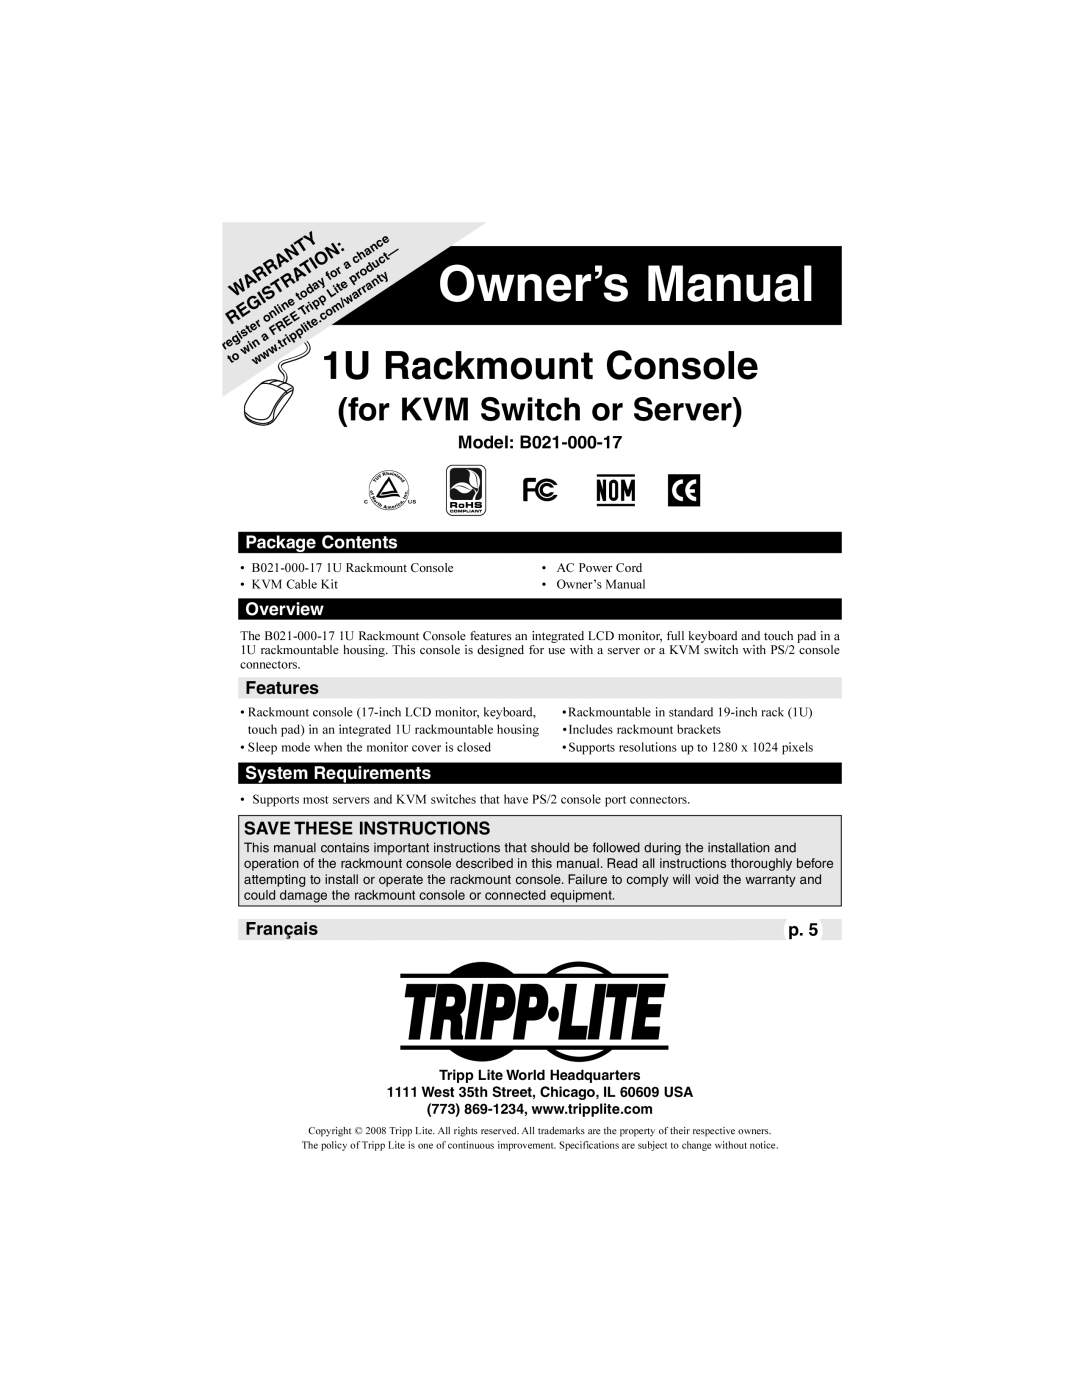 Tripp Lite owner manual 1U Rackmount Console, Model B021-000-17, Package Contents, Overview, Features, Français 